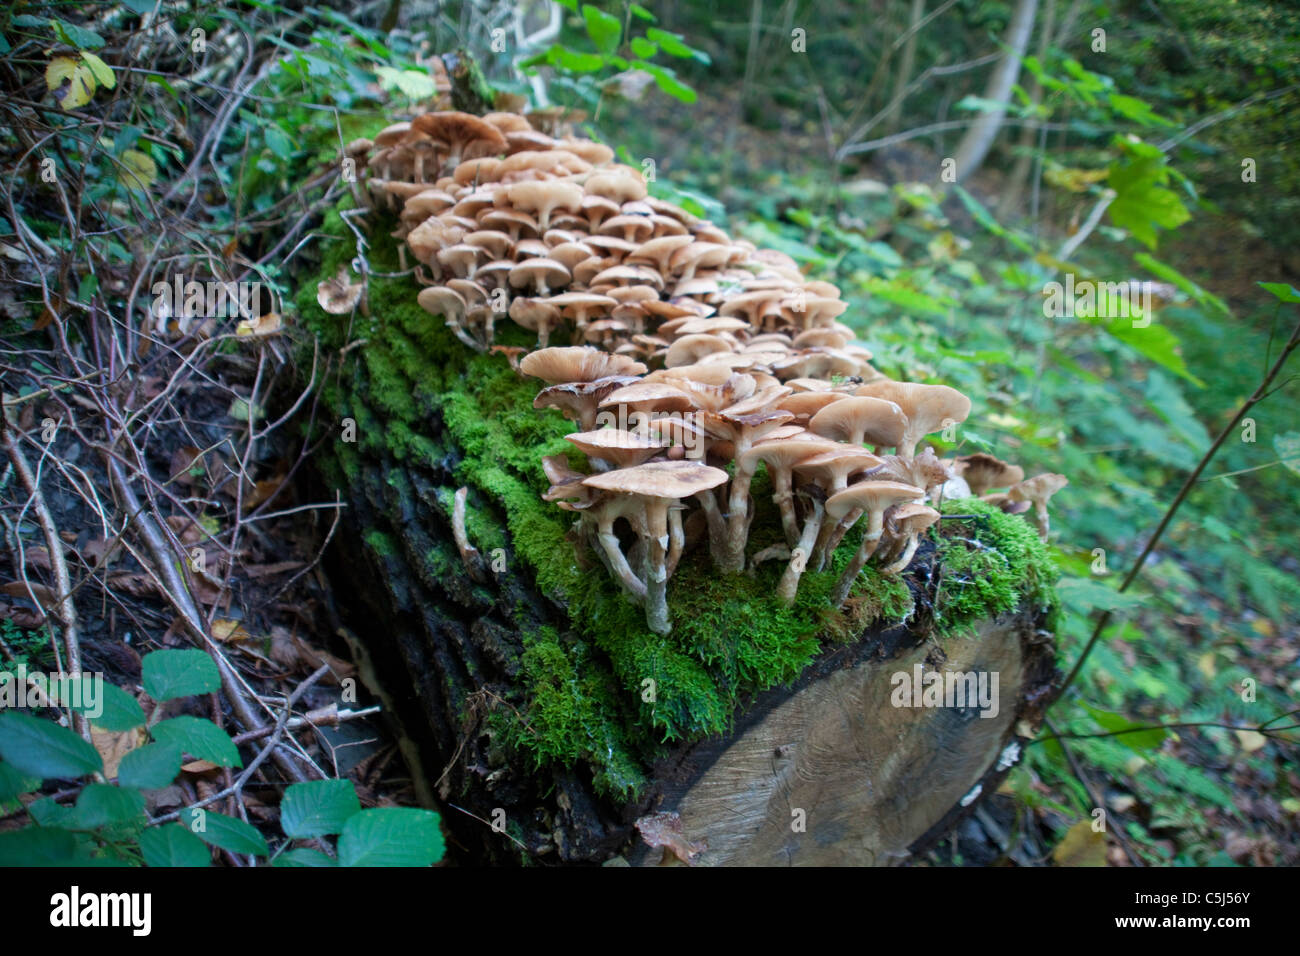 Wildwachsende Pilze im Wald bei Traben-Trarbach, Moselle, la culture des champignons sauvages dans la forêt de Traben-Trarbach, Moselle Banque D'Images